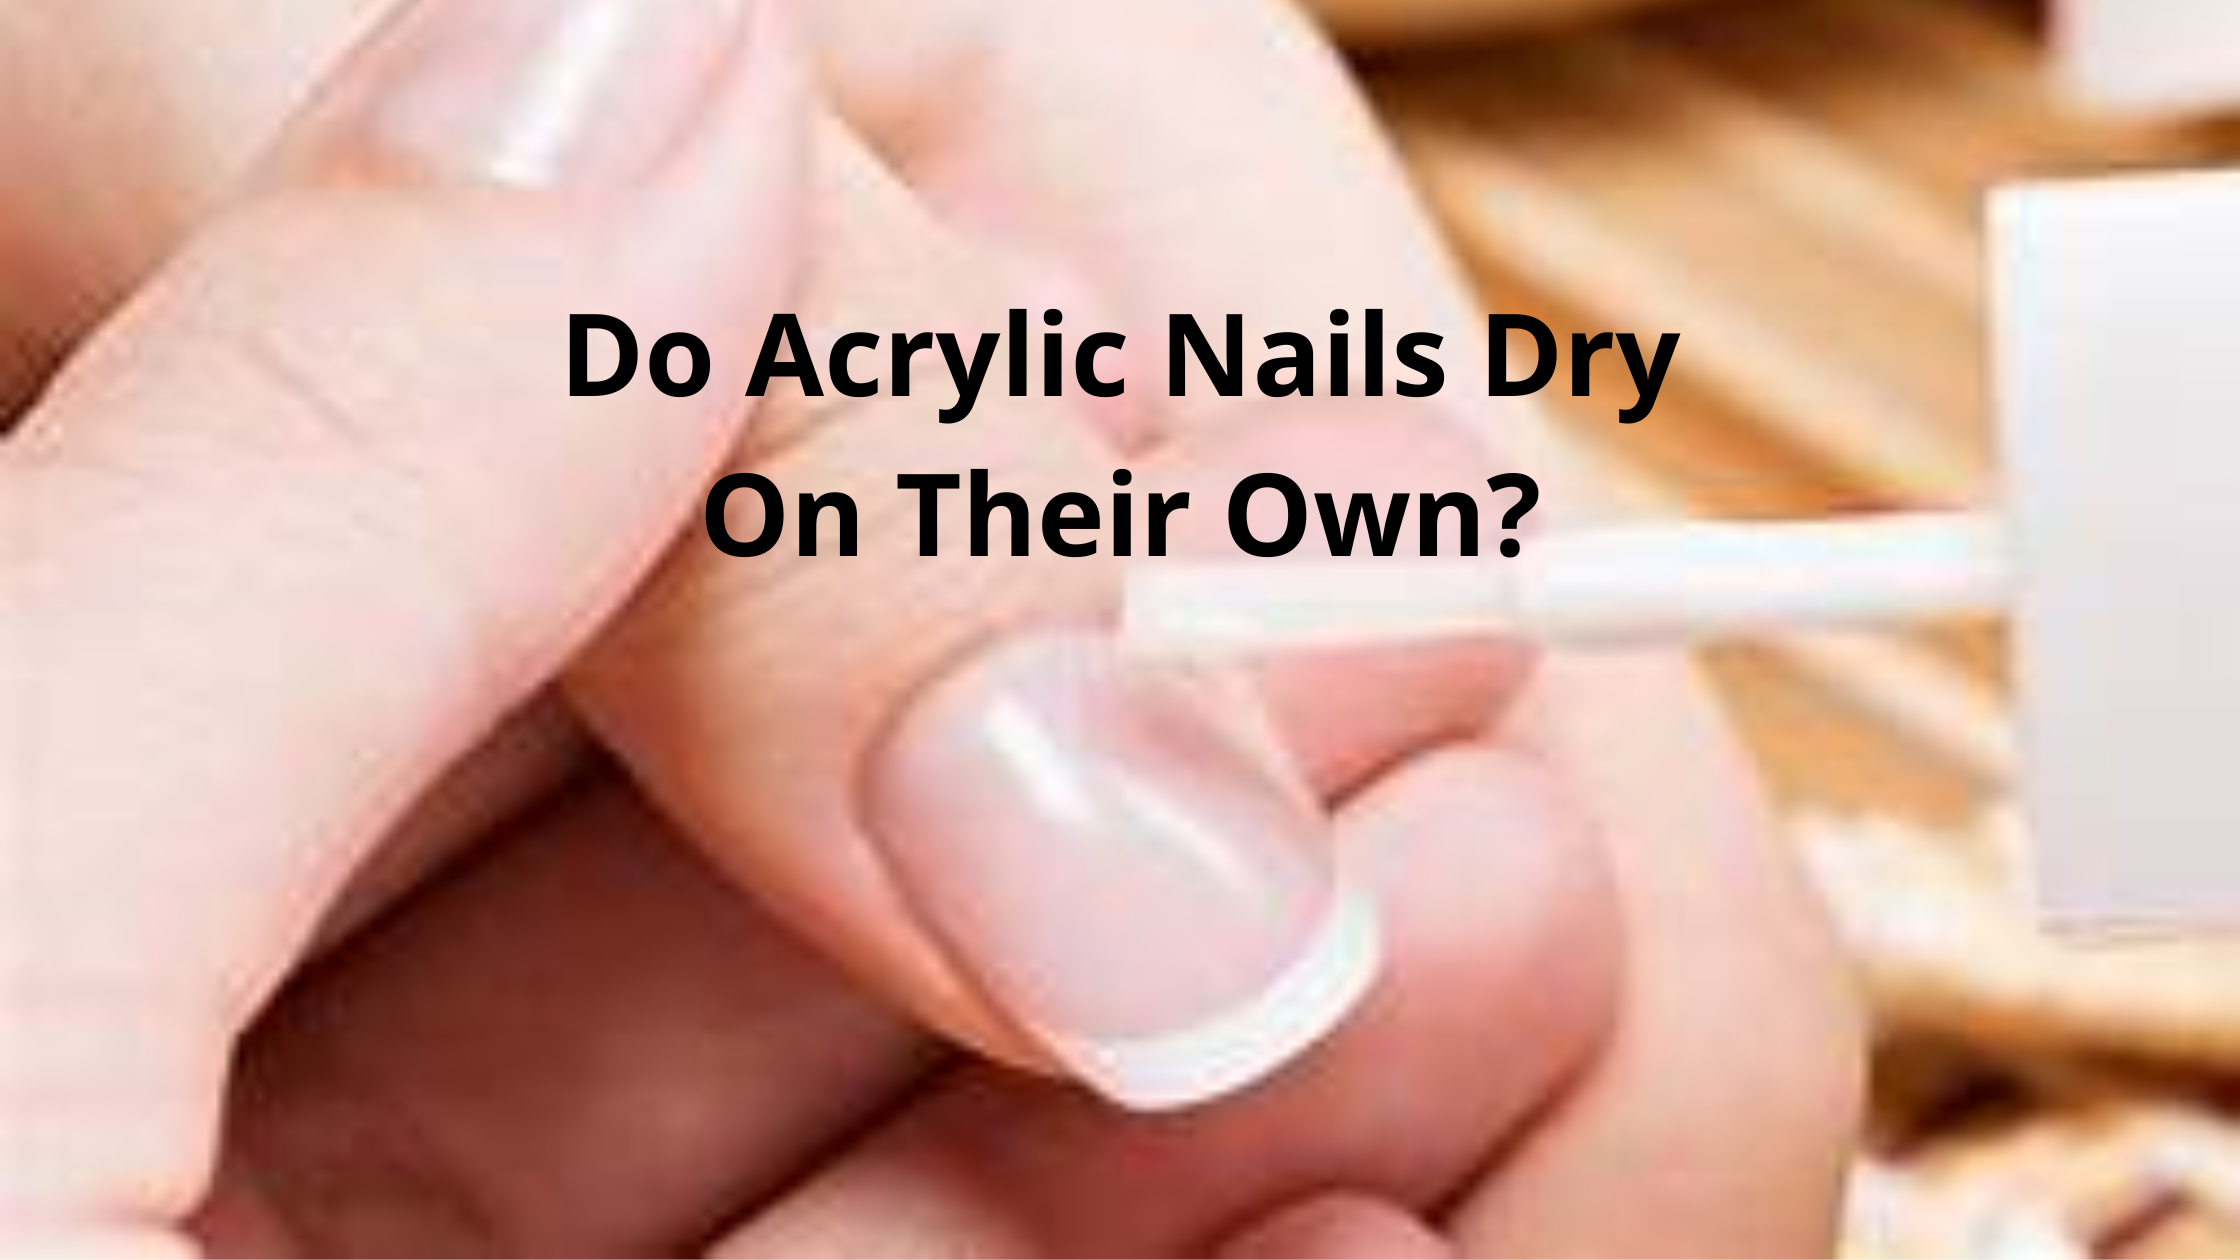 Do Acrylic Nails Dry On Their Own?